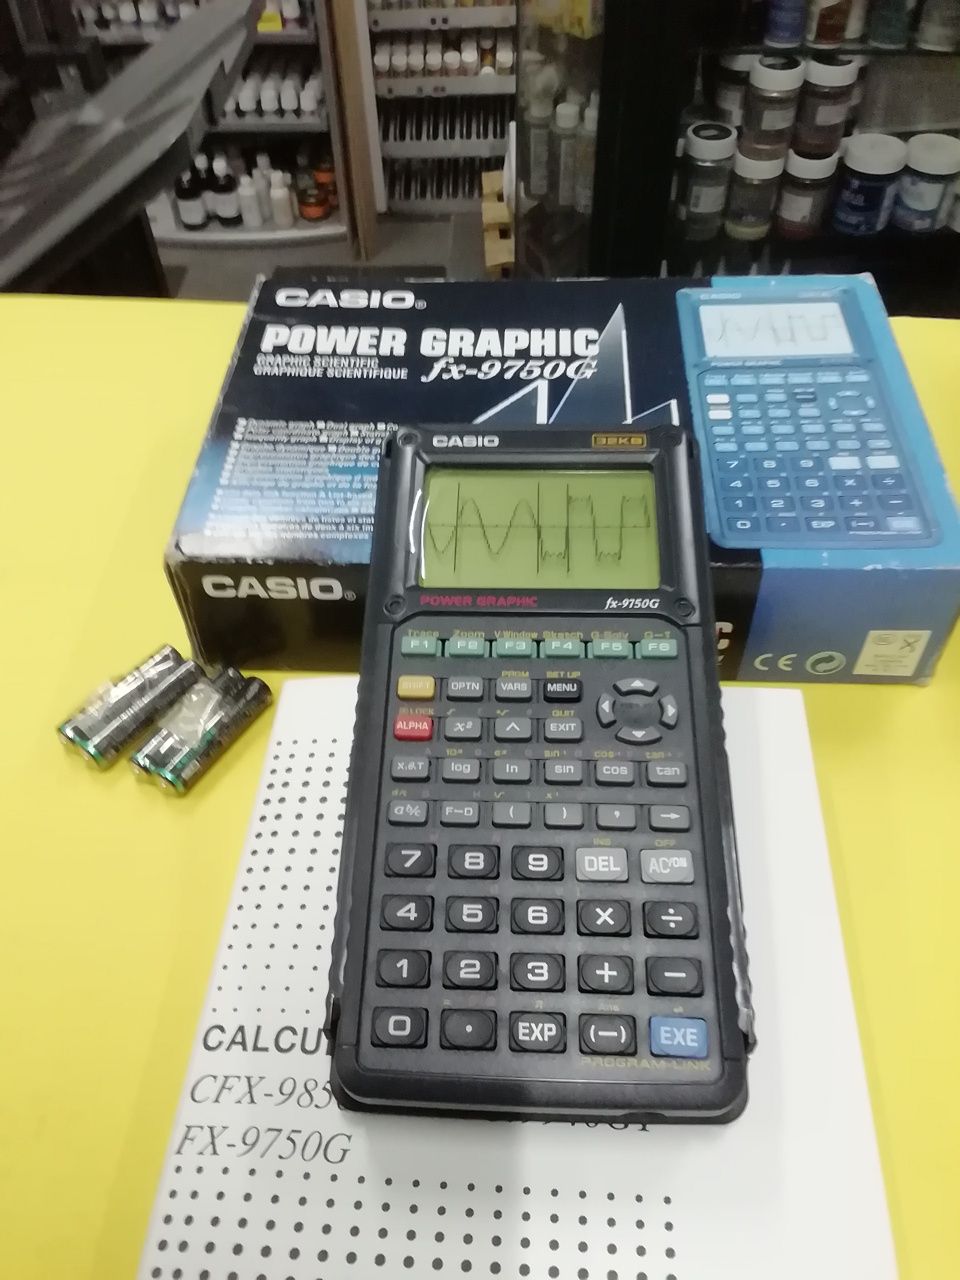 Calculadora Casio Power Grafic FX 9750G